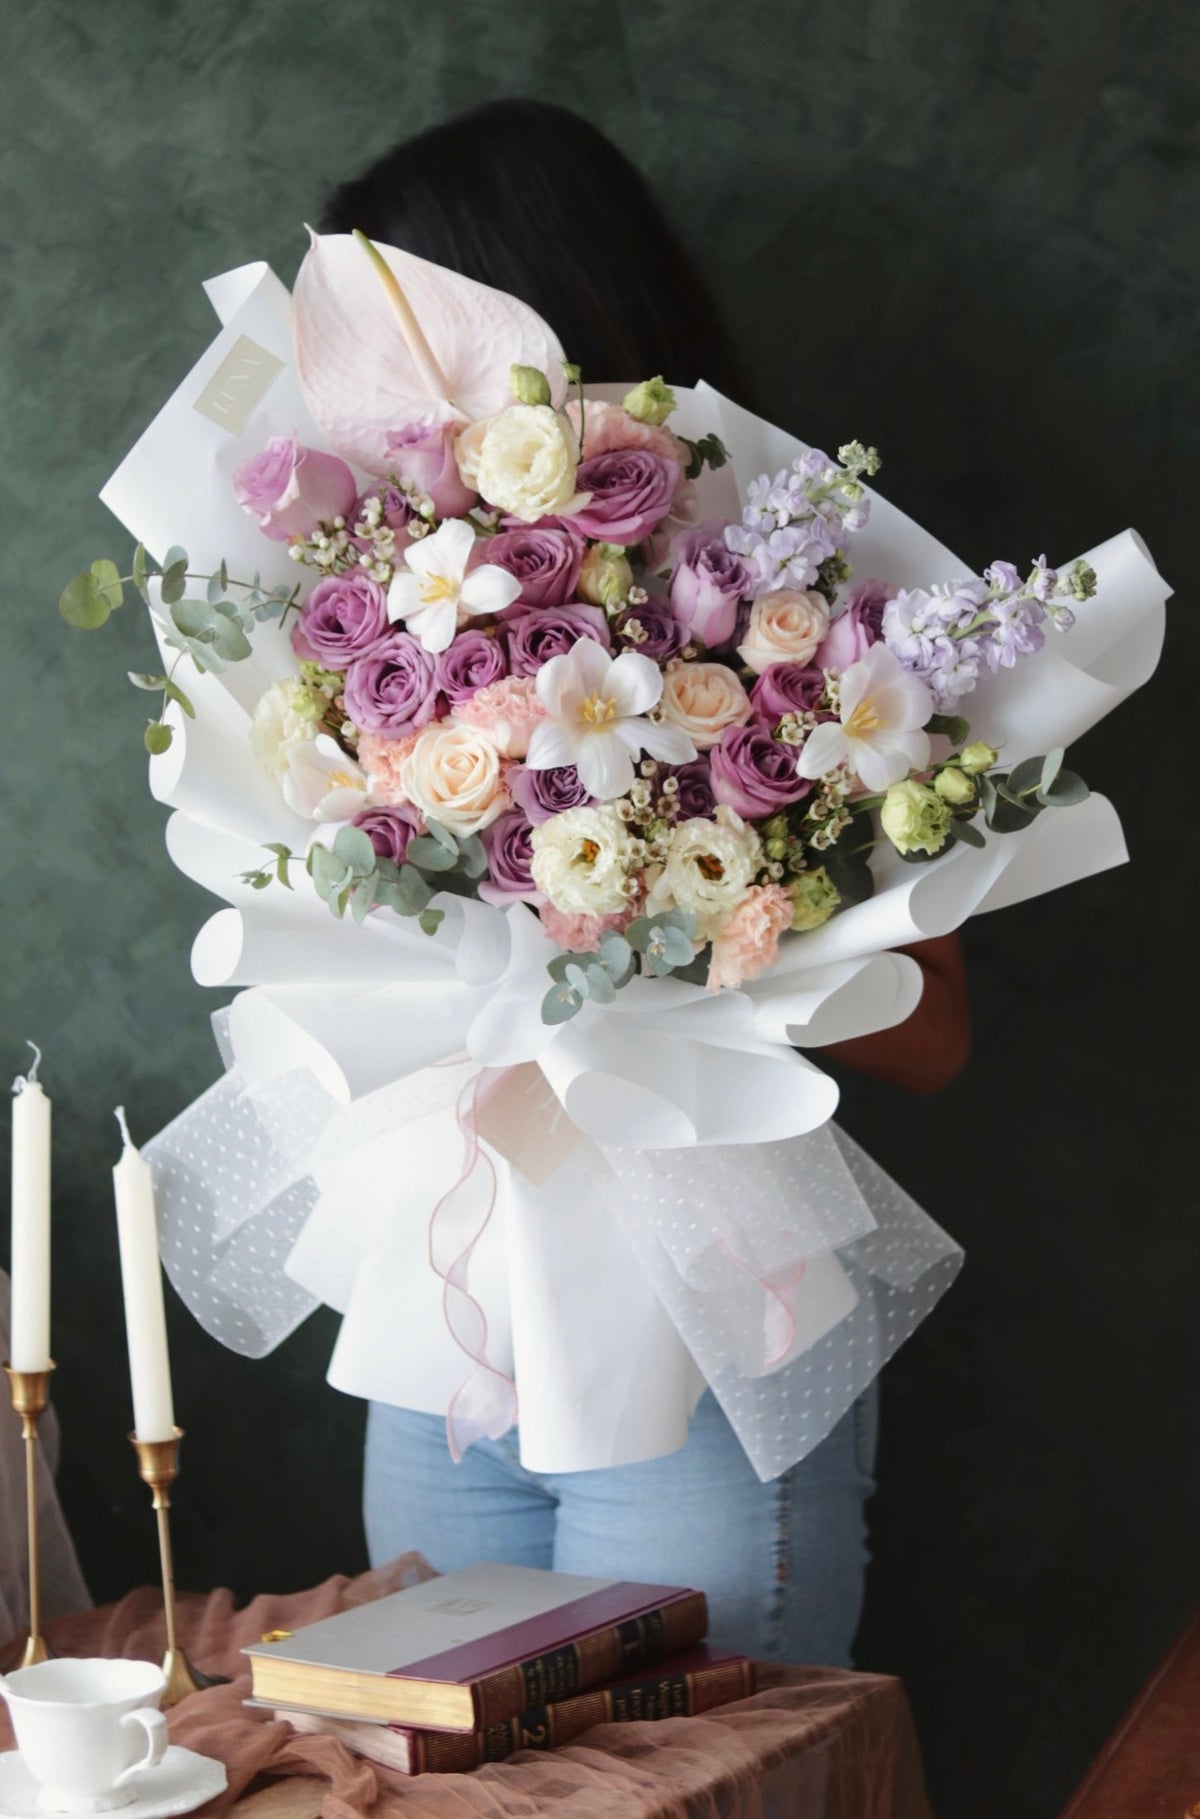 LUNA FLOWER BOUQUET, Online Florist Delivery KL